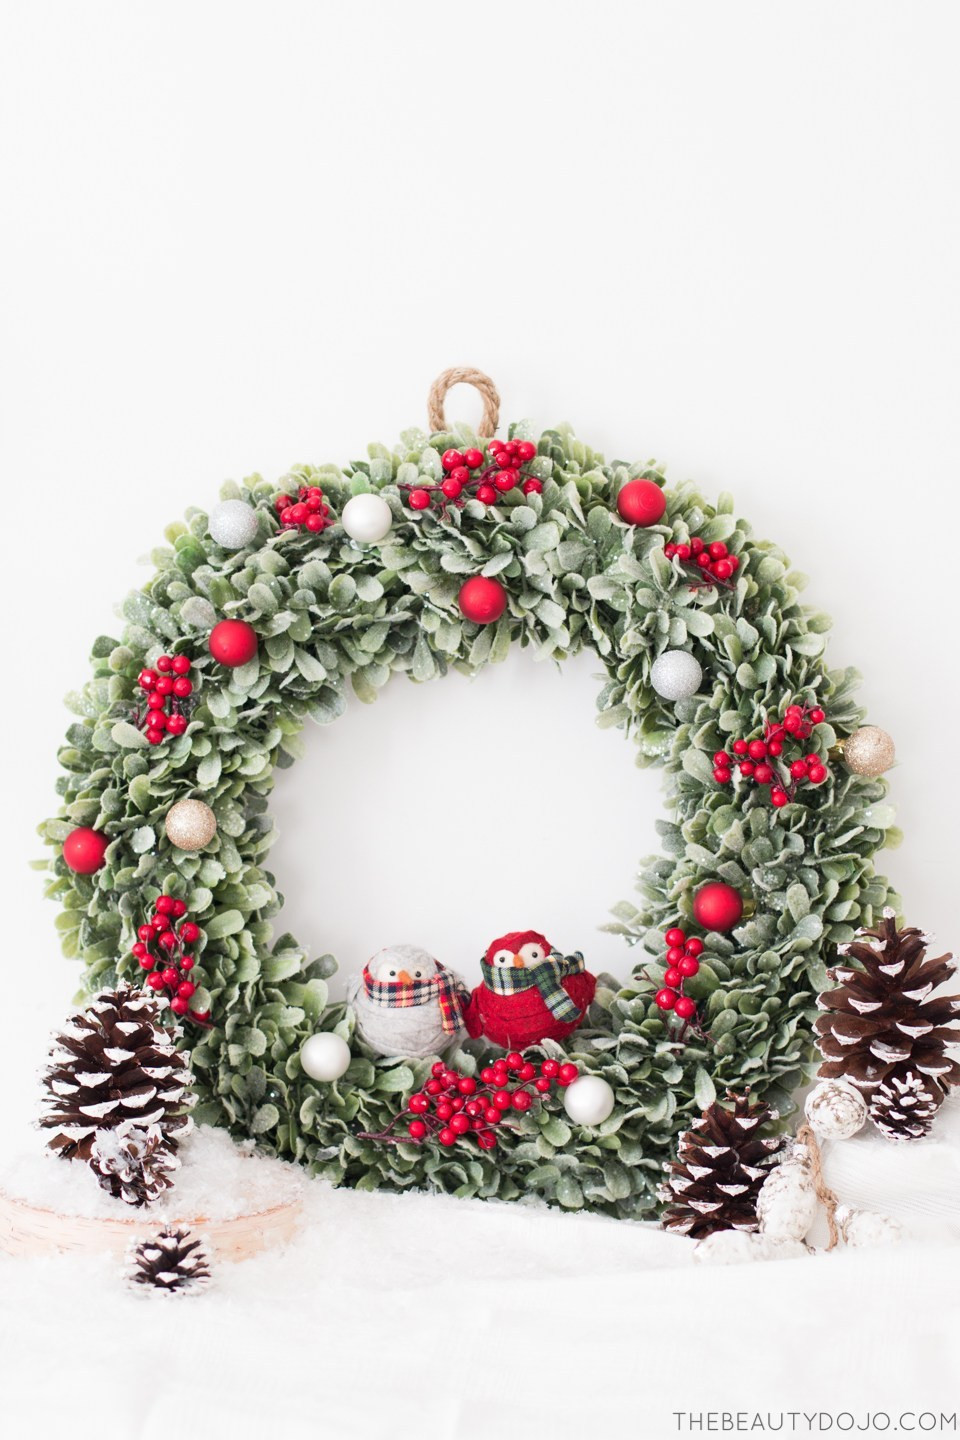 Best ideas about DIY Christmas Photos
. Save or Pin DIY Christmas Wreath The Beautydojo Now.